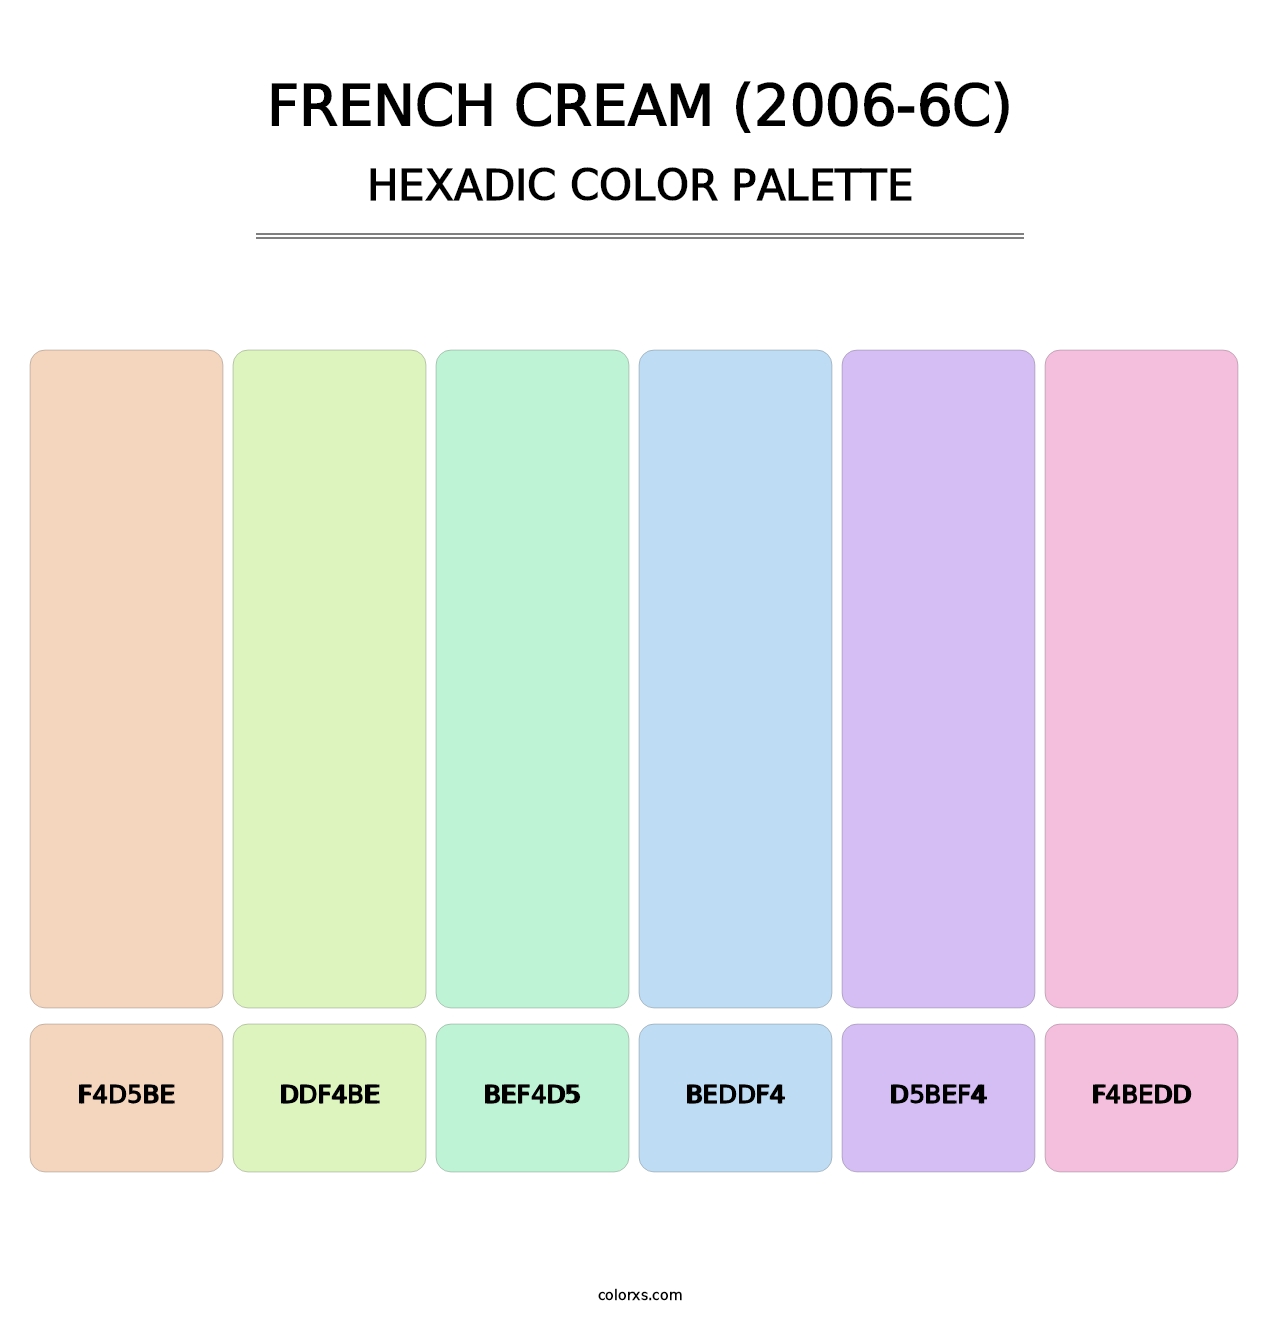 French Cream (2006-6C) - Hexadic Color Palette